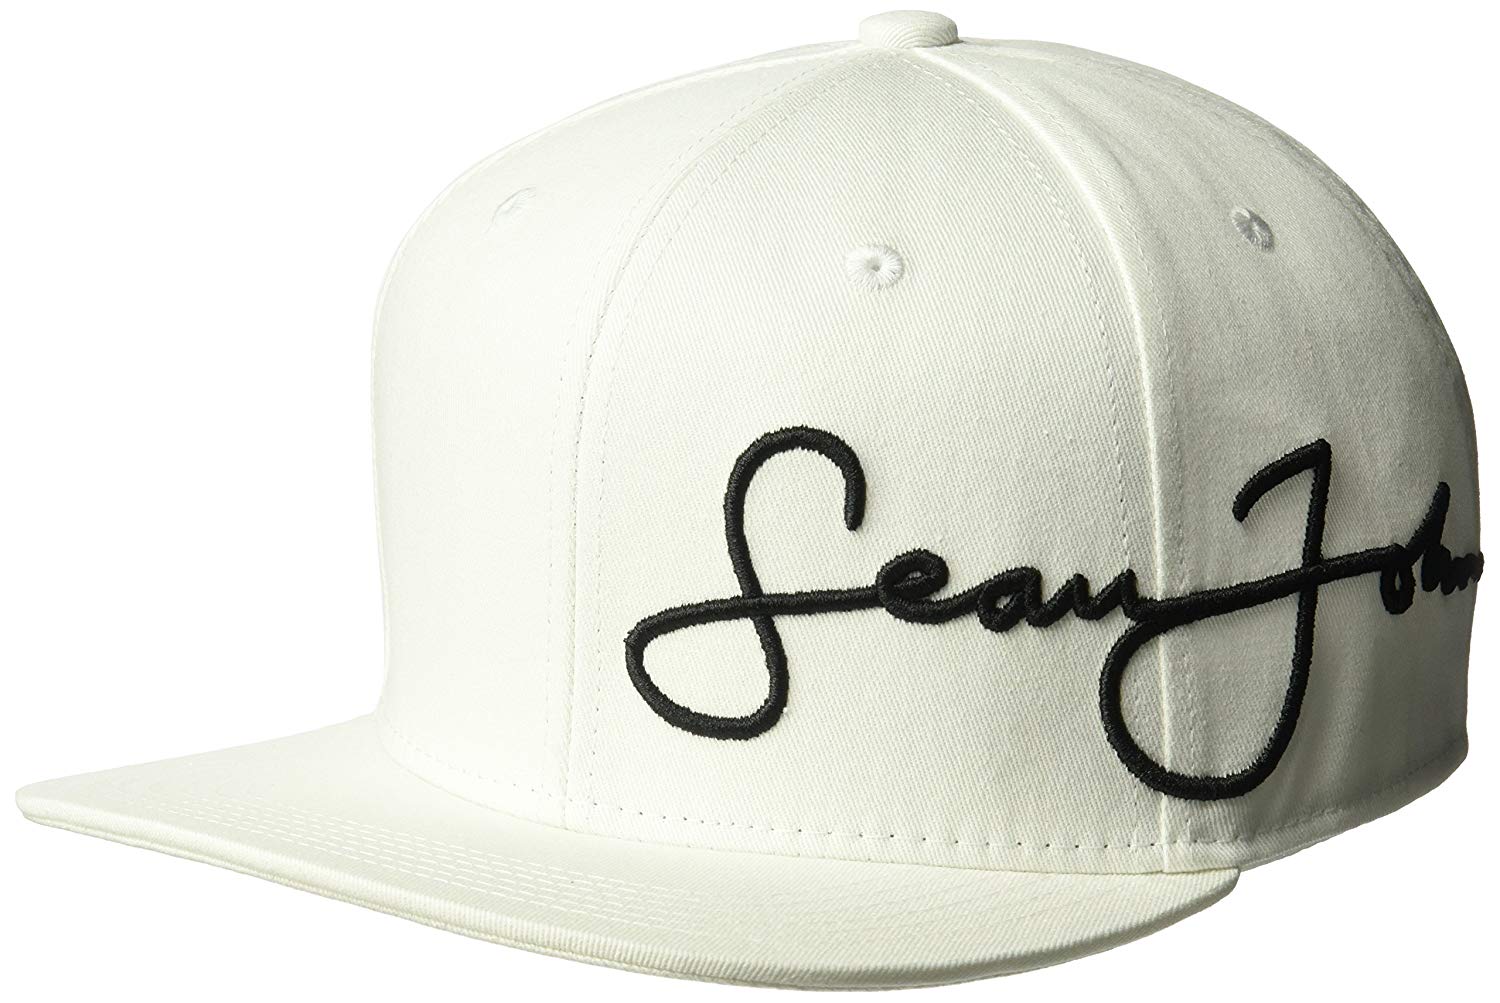 Sean Logo - Sean John Men's Core Script Baseball Cap, 3D Logo, Adjustable, White ...